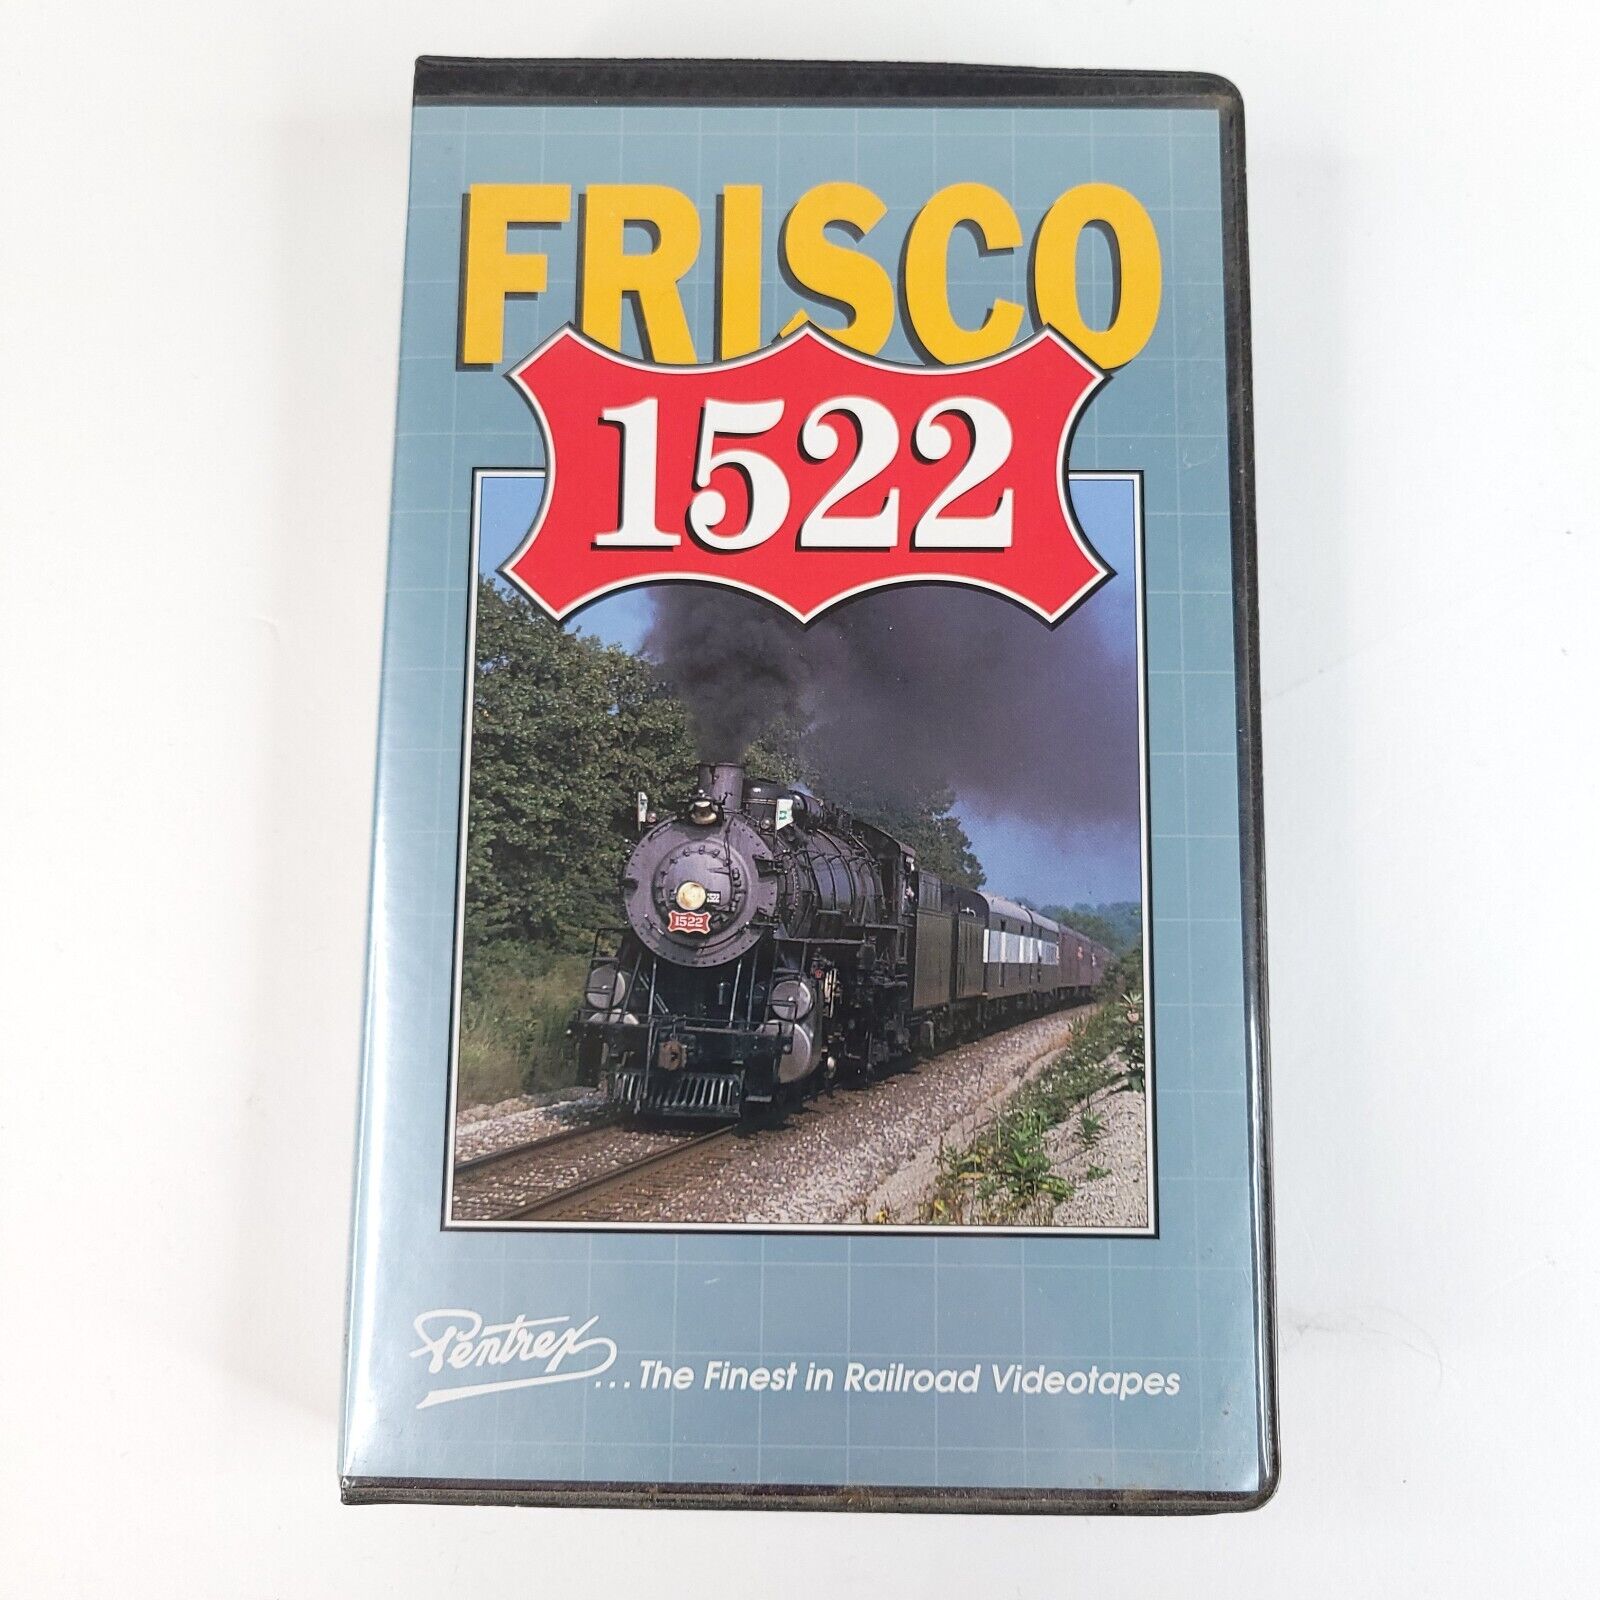 VTG Pentrex Railroad Frisco 1522 Steam Engine 1994 VHS Tape and Case